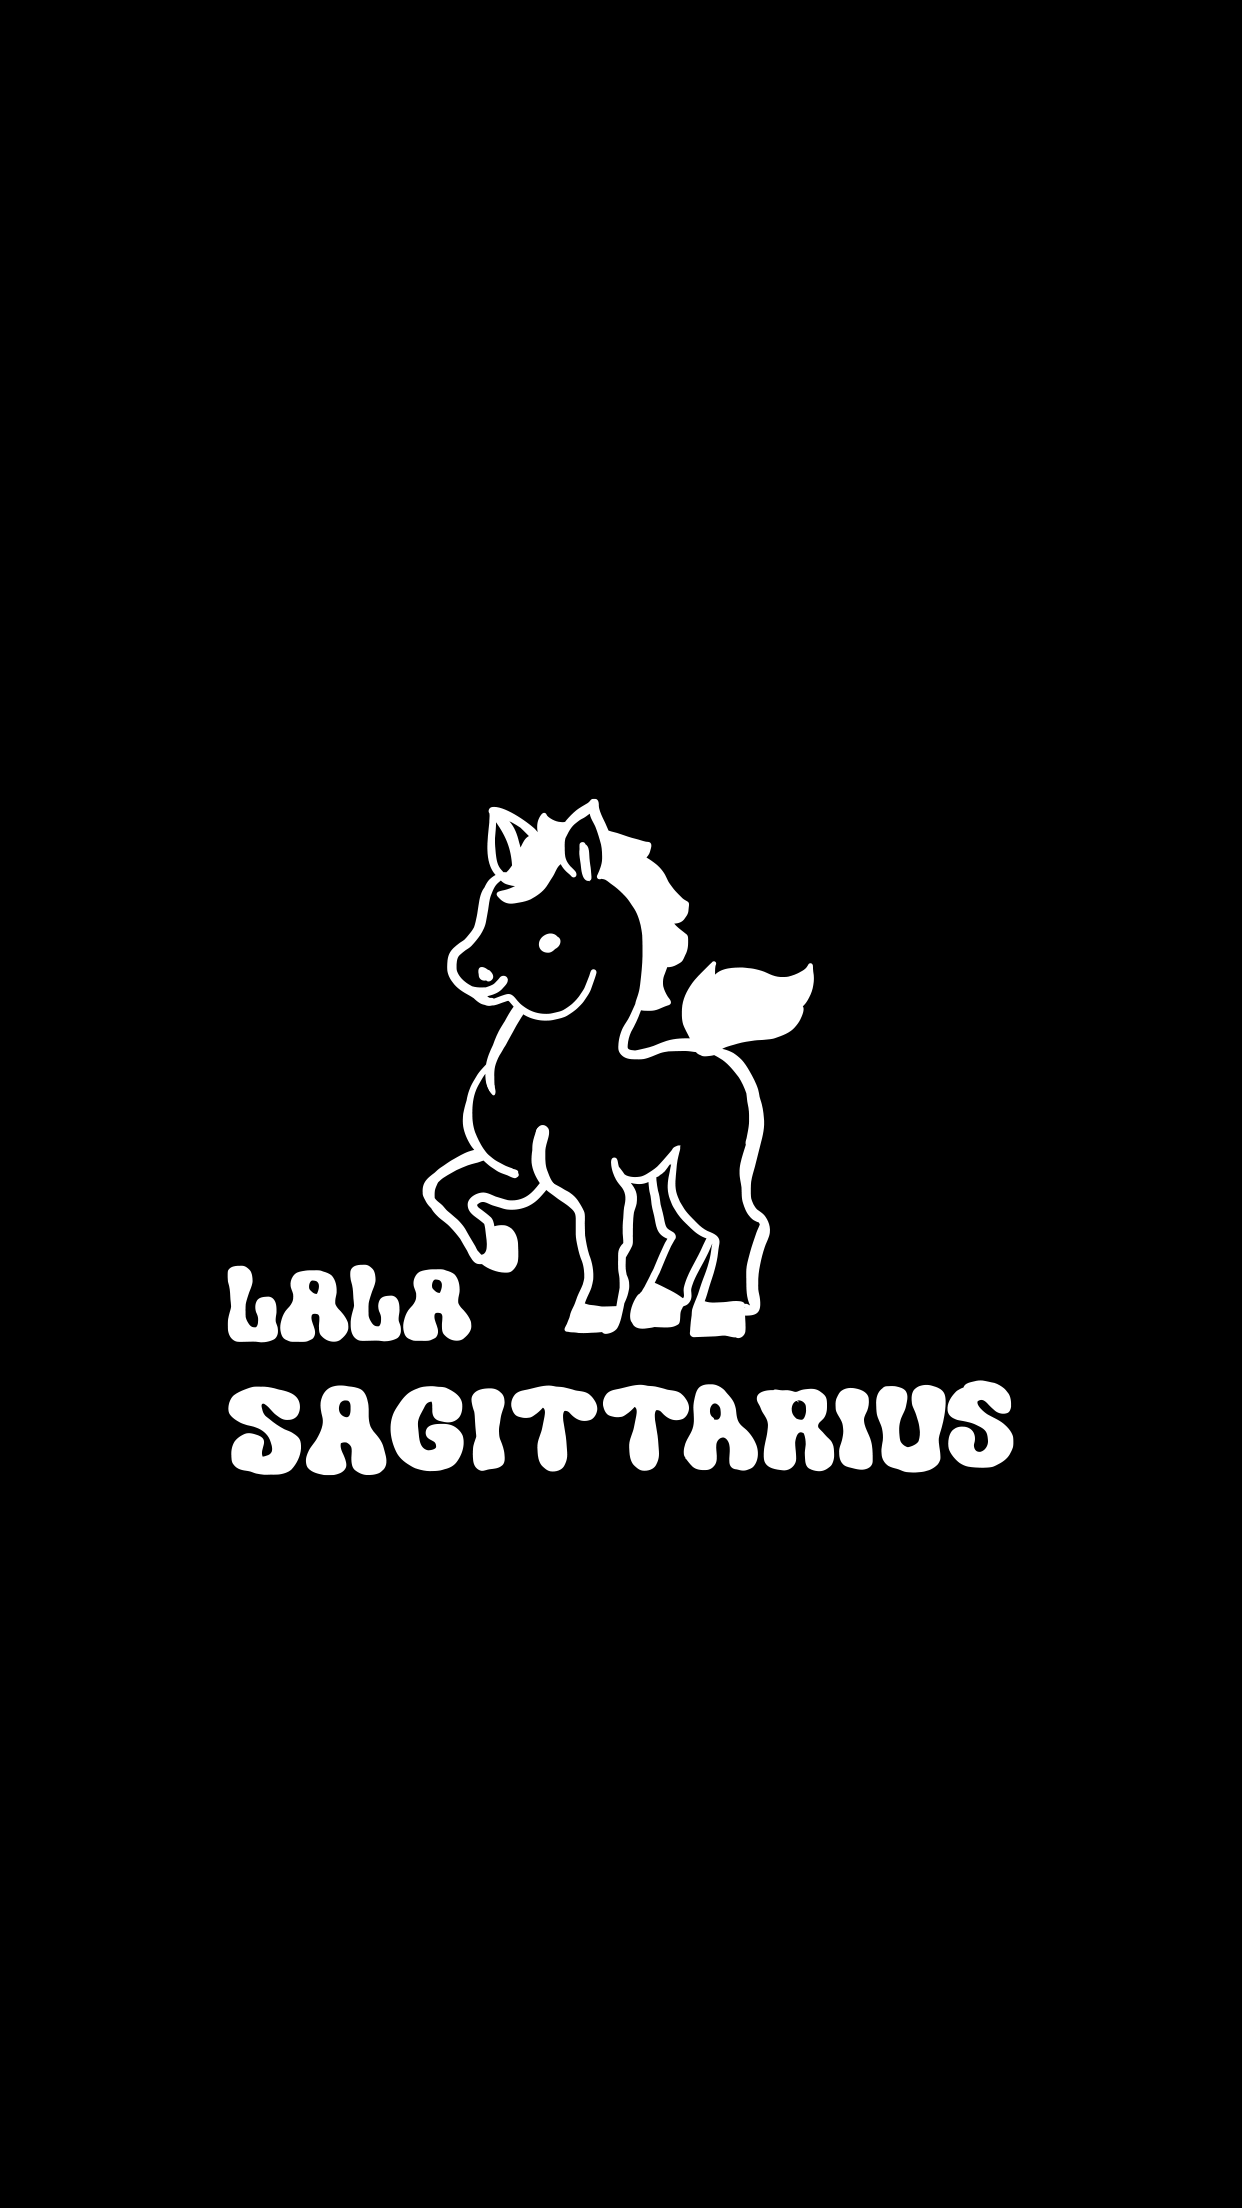 Astro LALA - Sagittarius